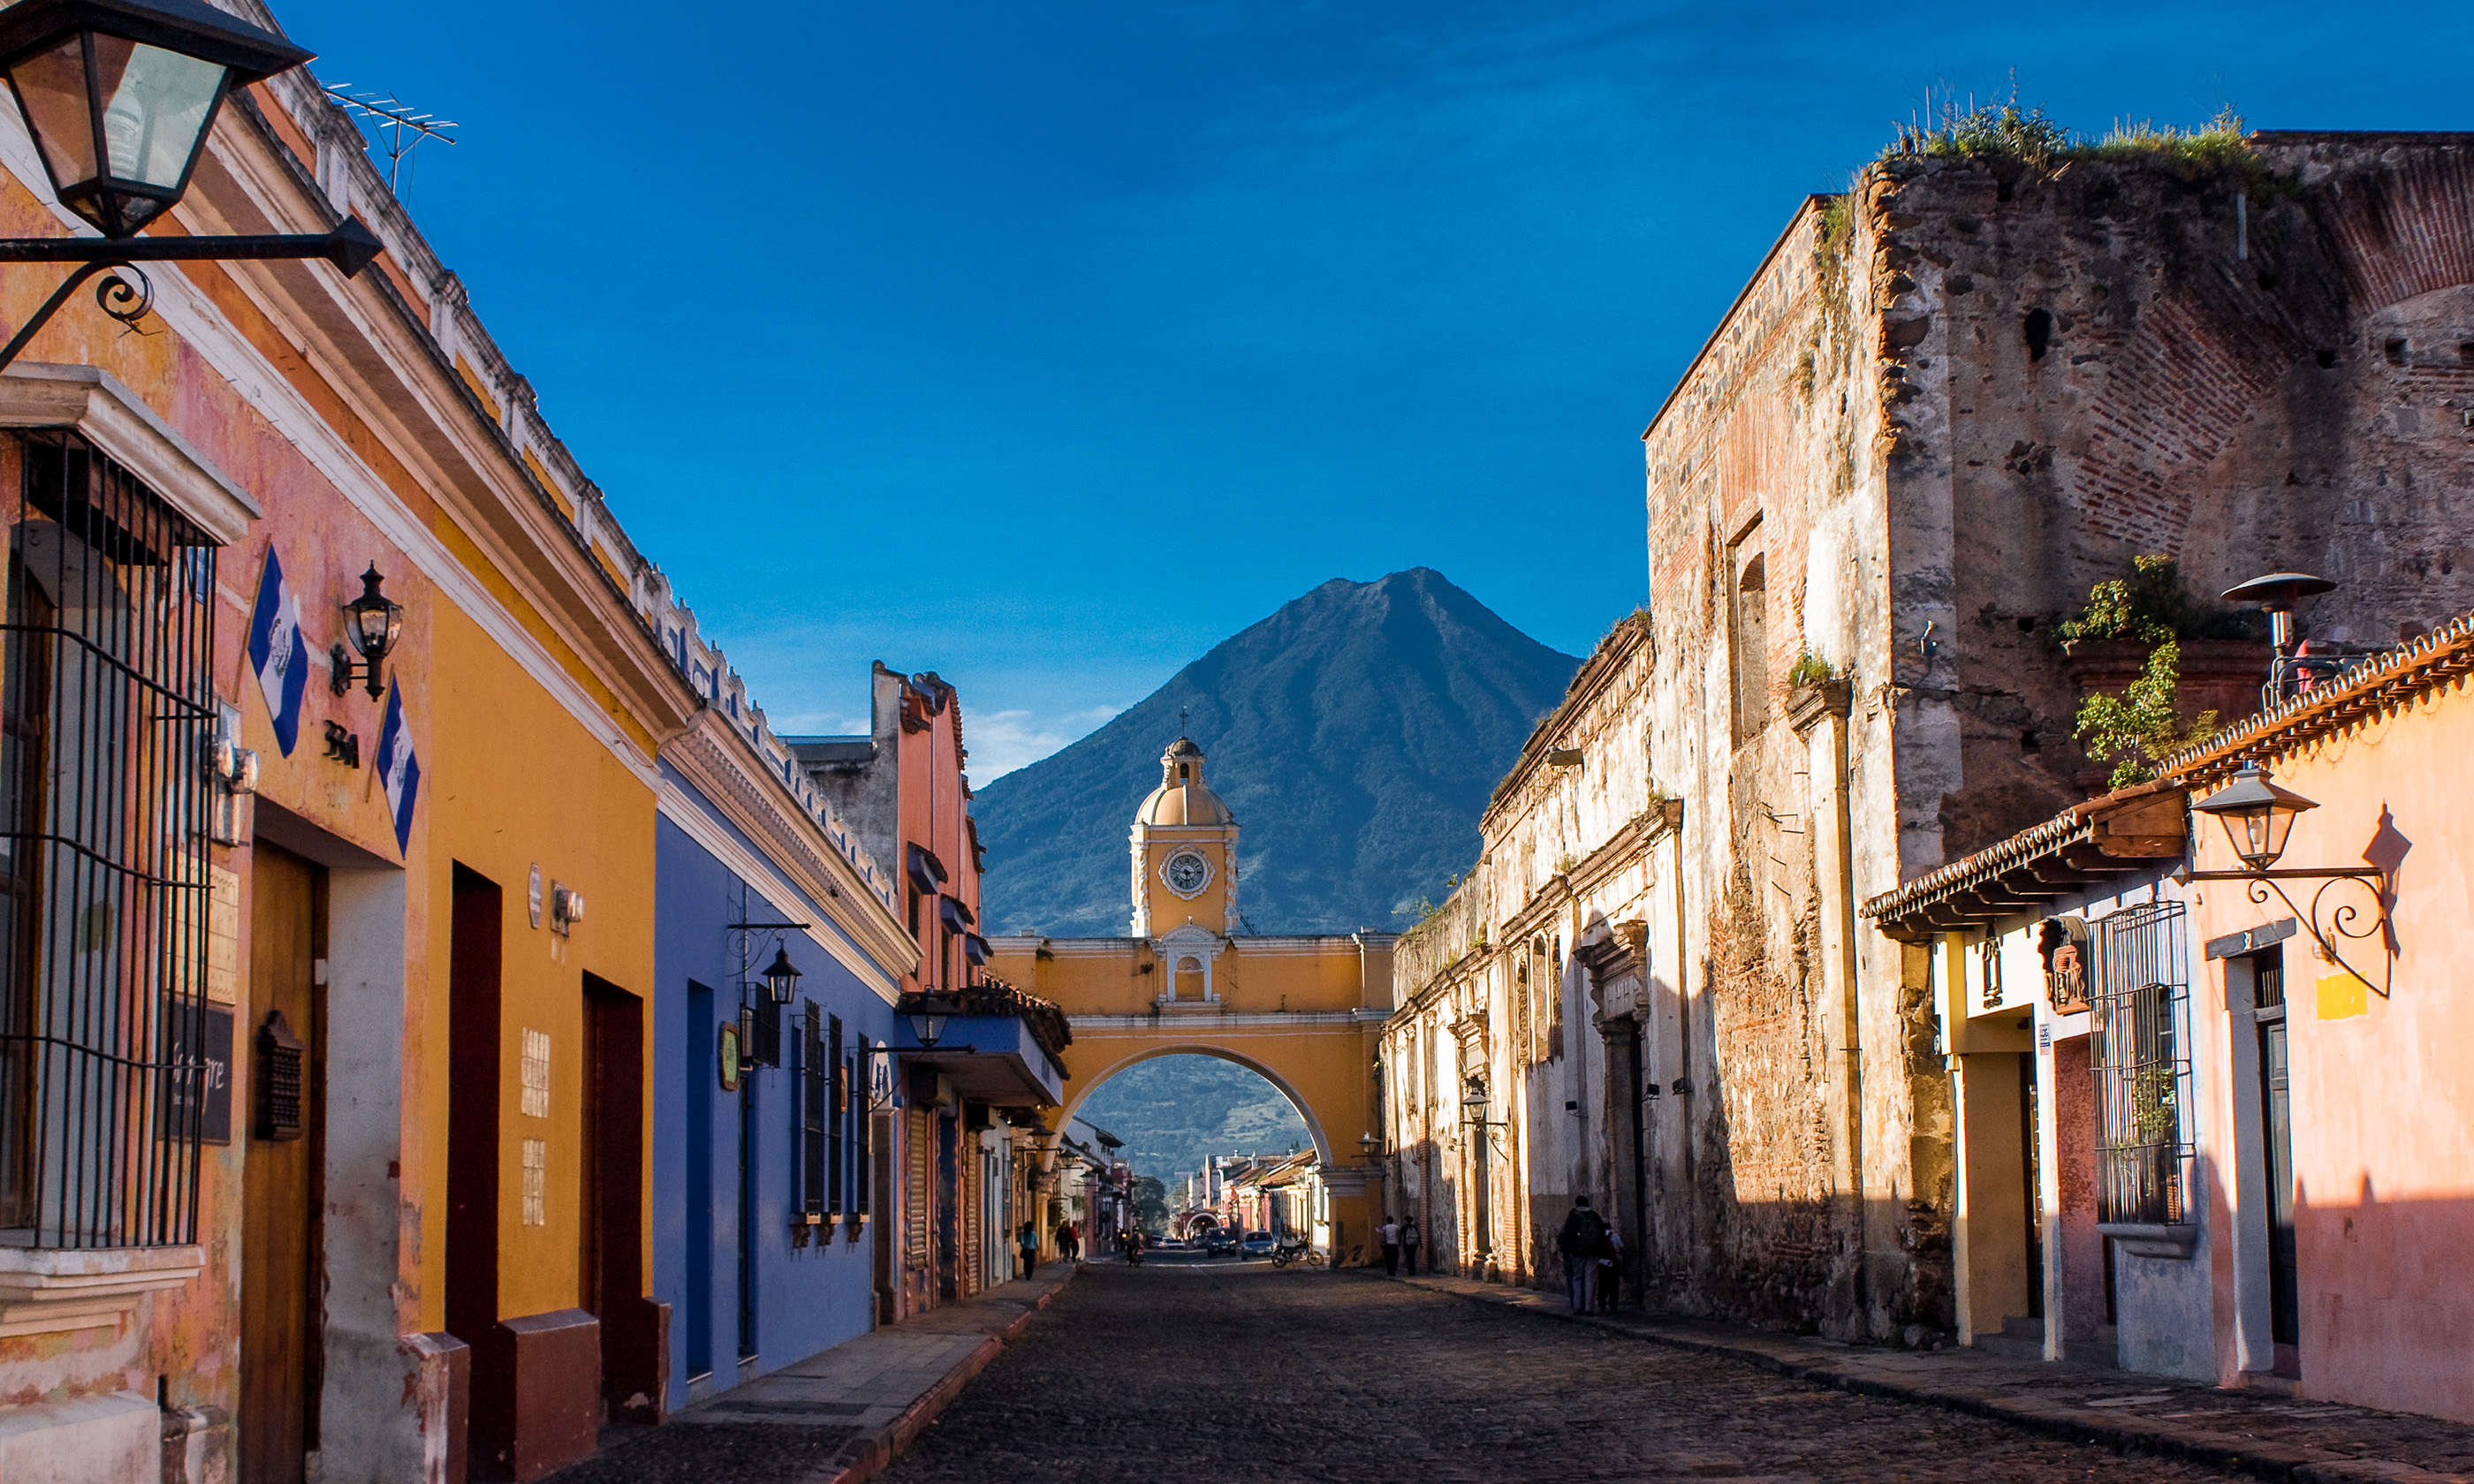 Antigua, Guatemala (Shutterstock.com)